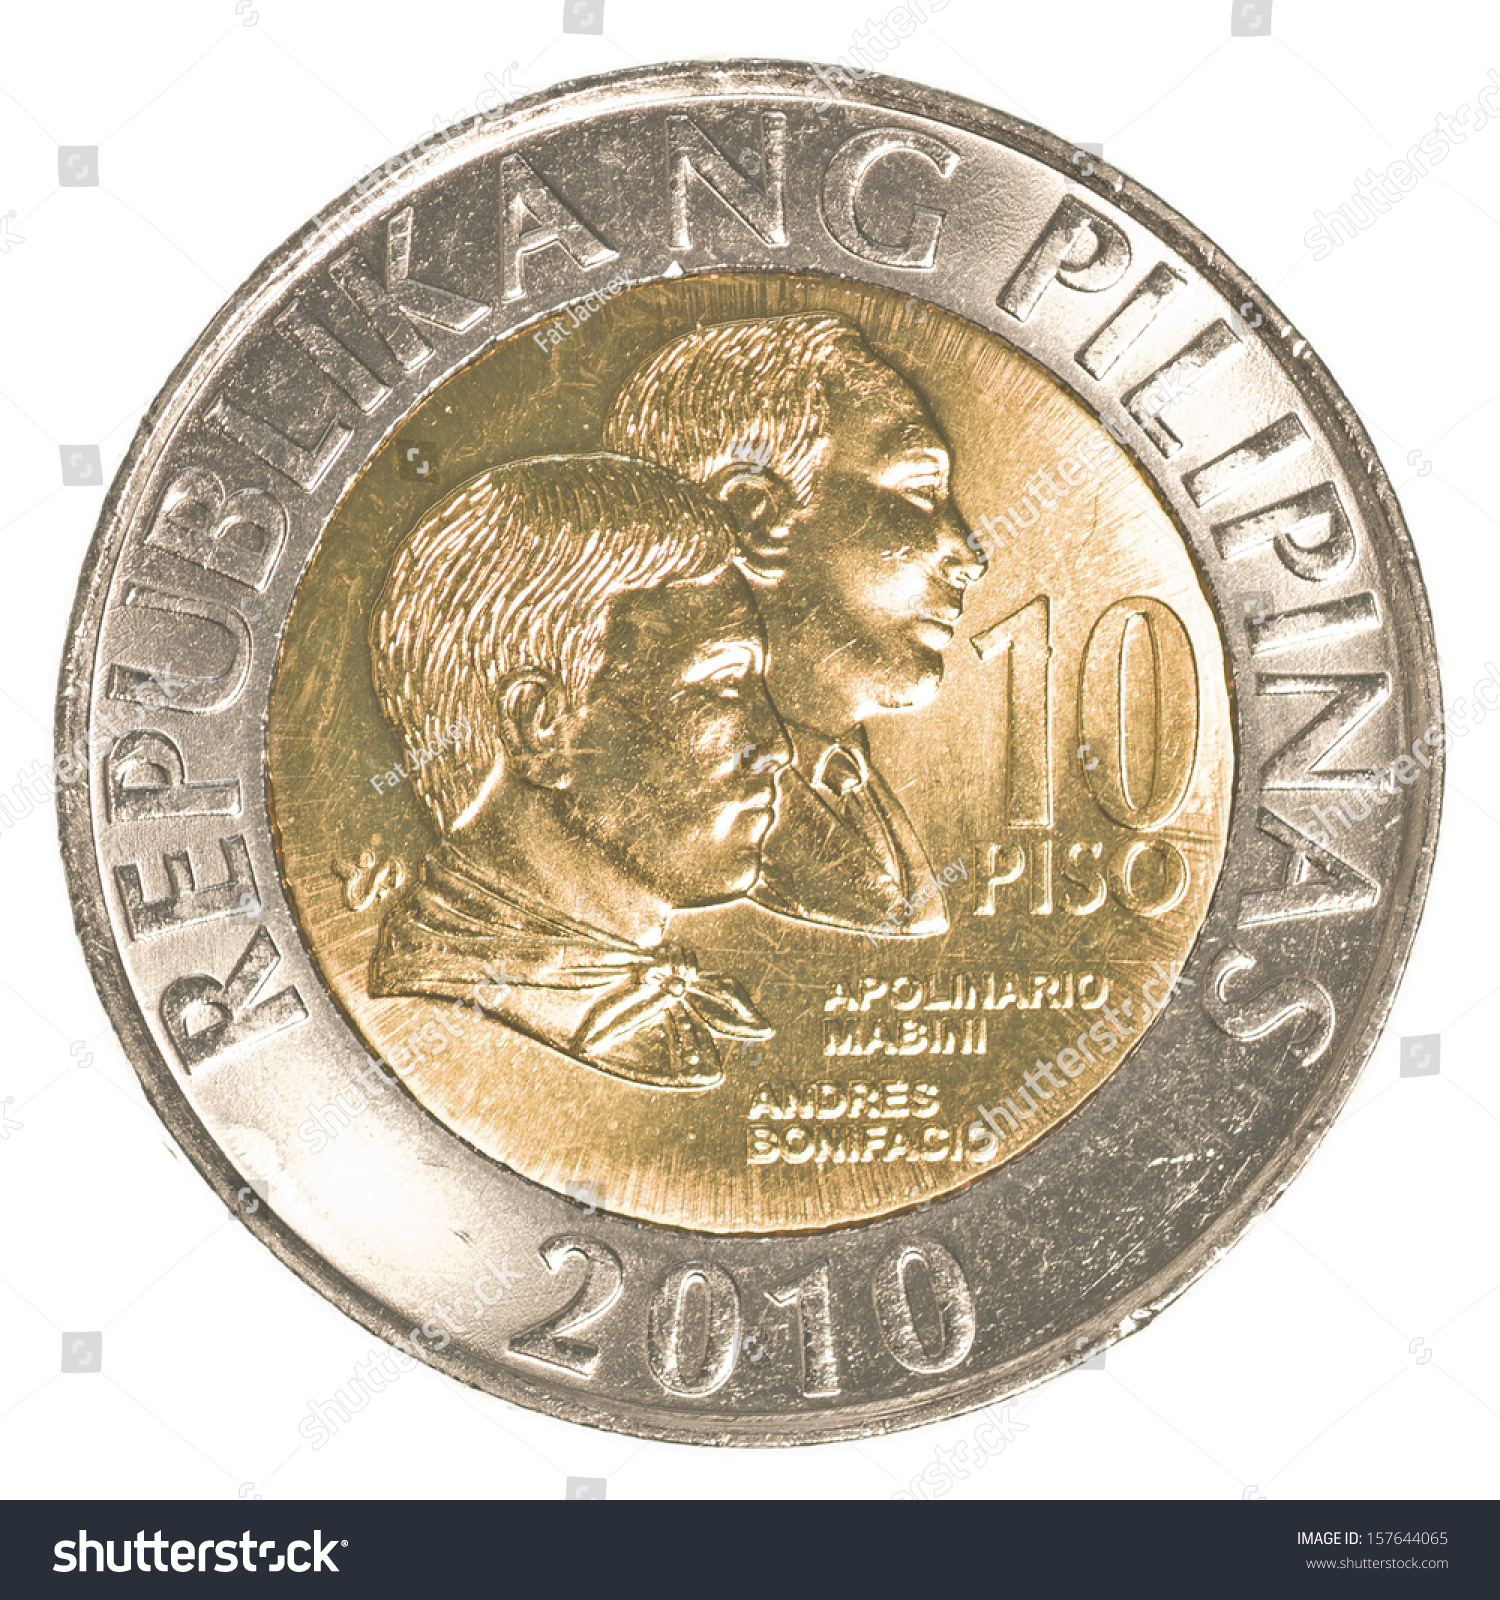 philippine money clipart - photo #29